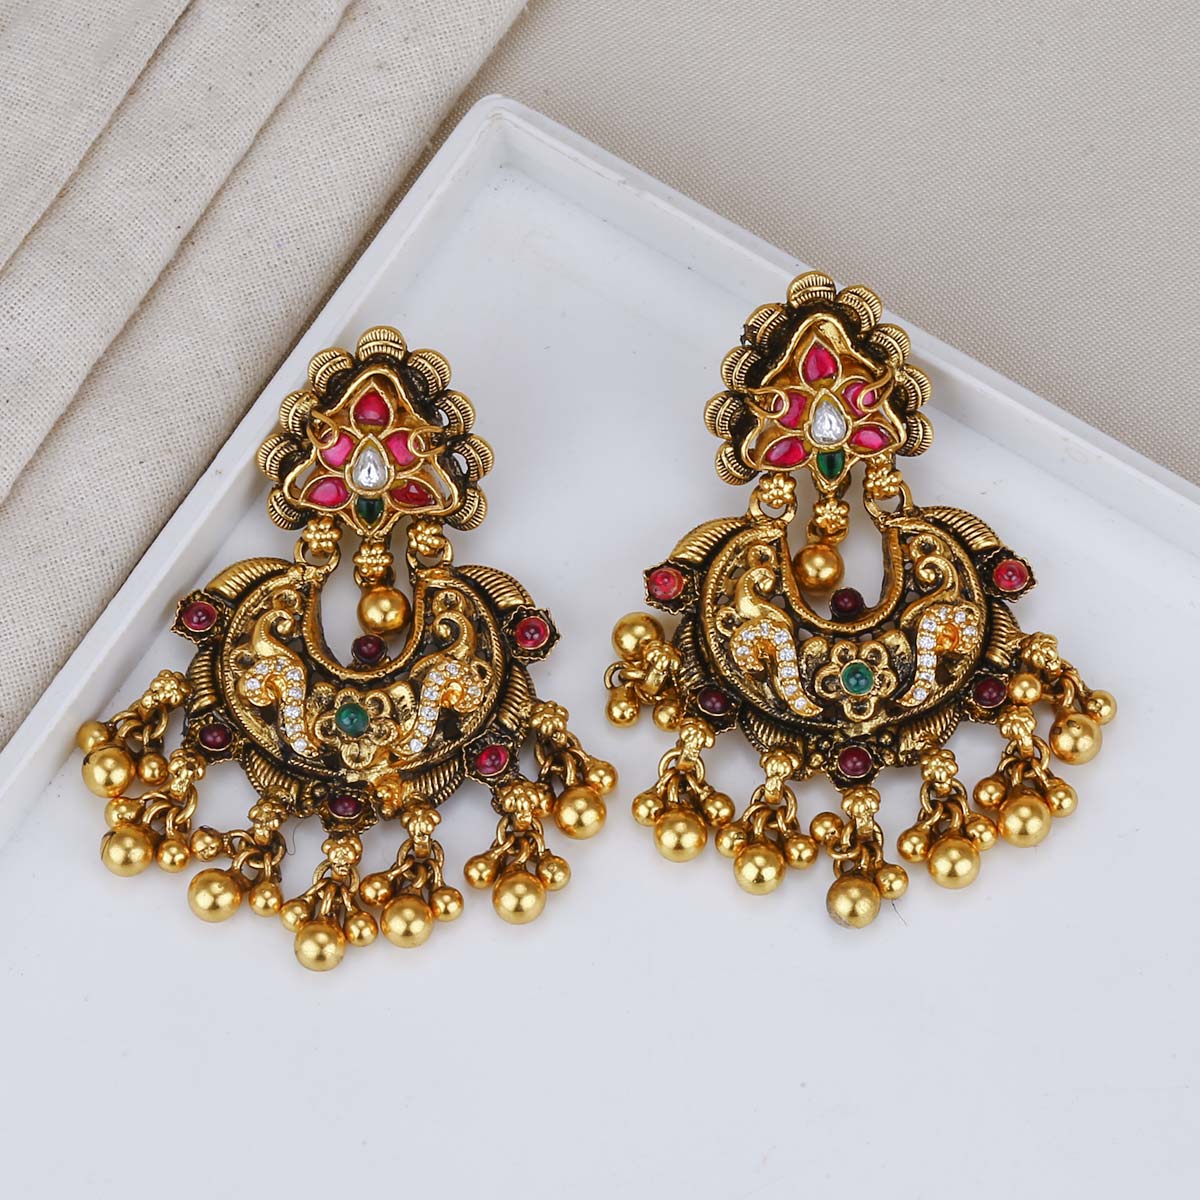 Shop Gold Chandeliers Temple Earrings Online at Best Price | Cbazaar